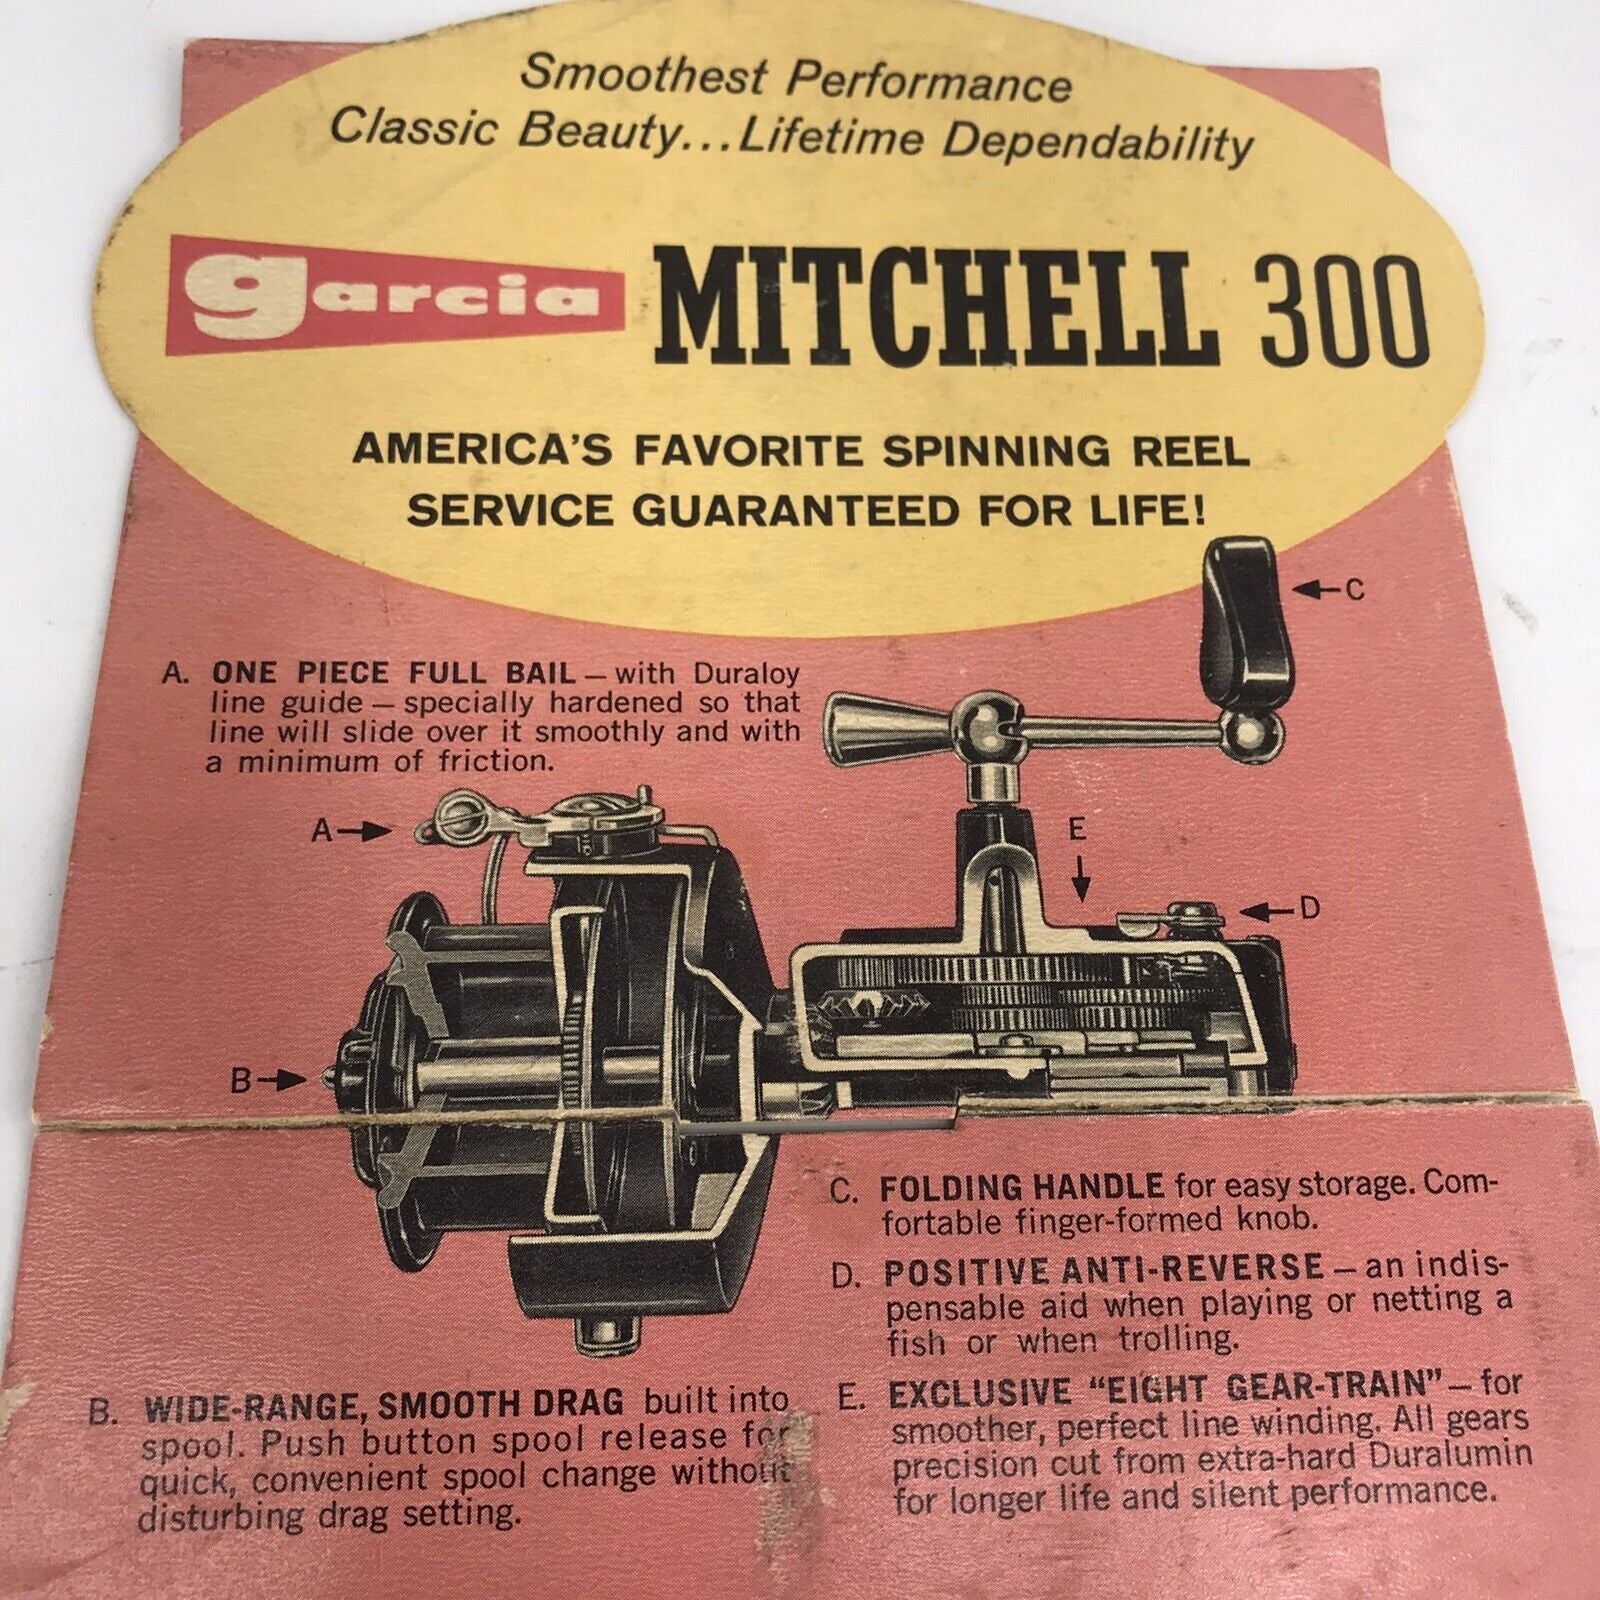 Vintage Garcia Mitchell 300 Reel Cardboard Advertisement